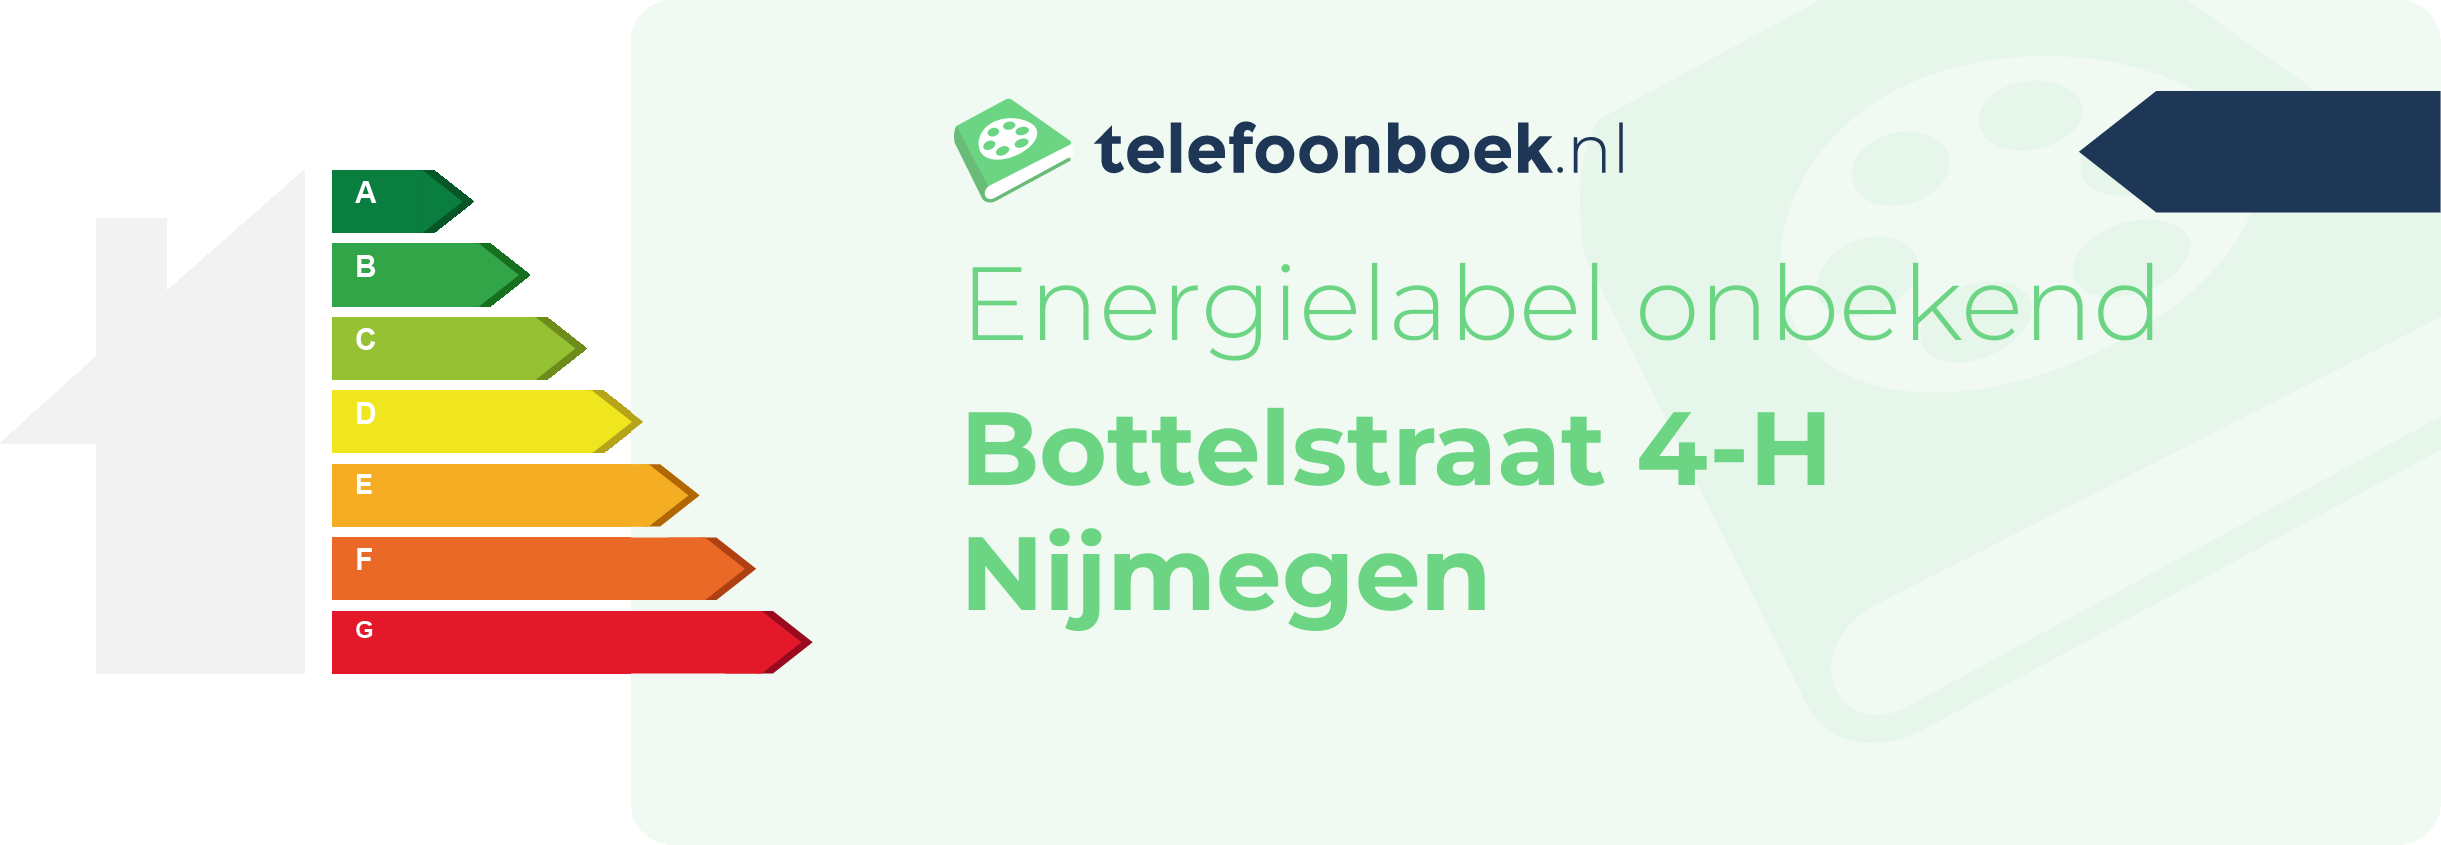 Energielabel Bottelstraat 4-H Nijmegen